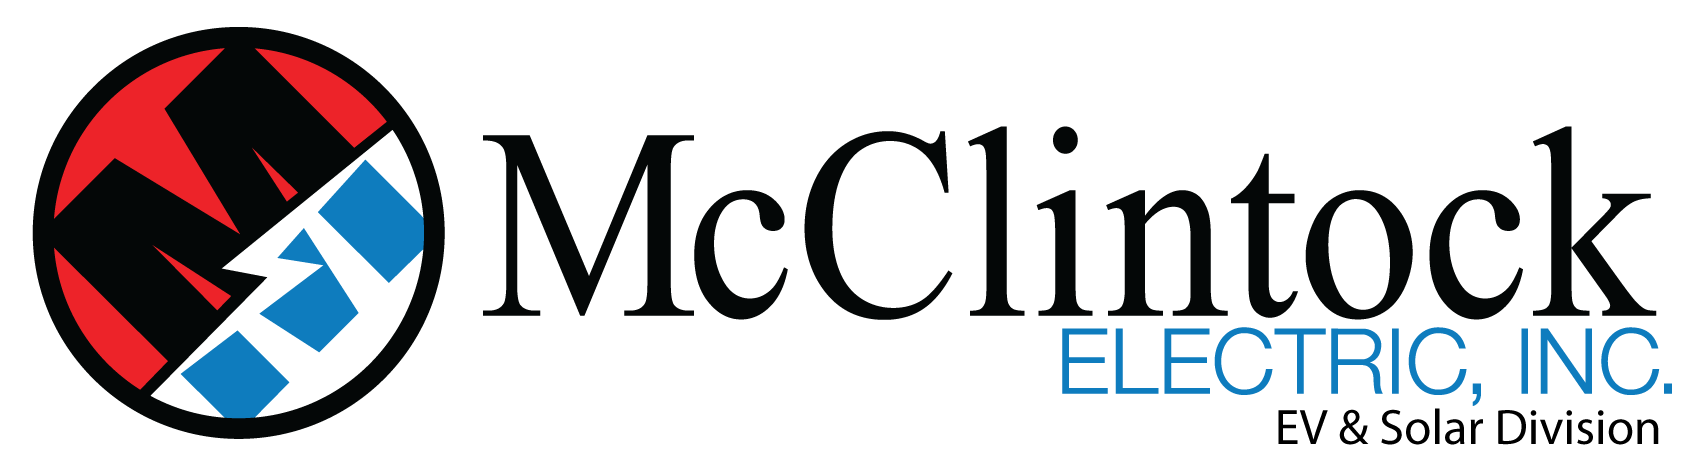 McClintock Electric